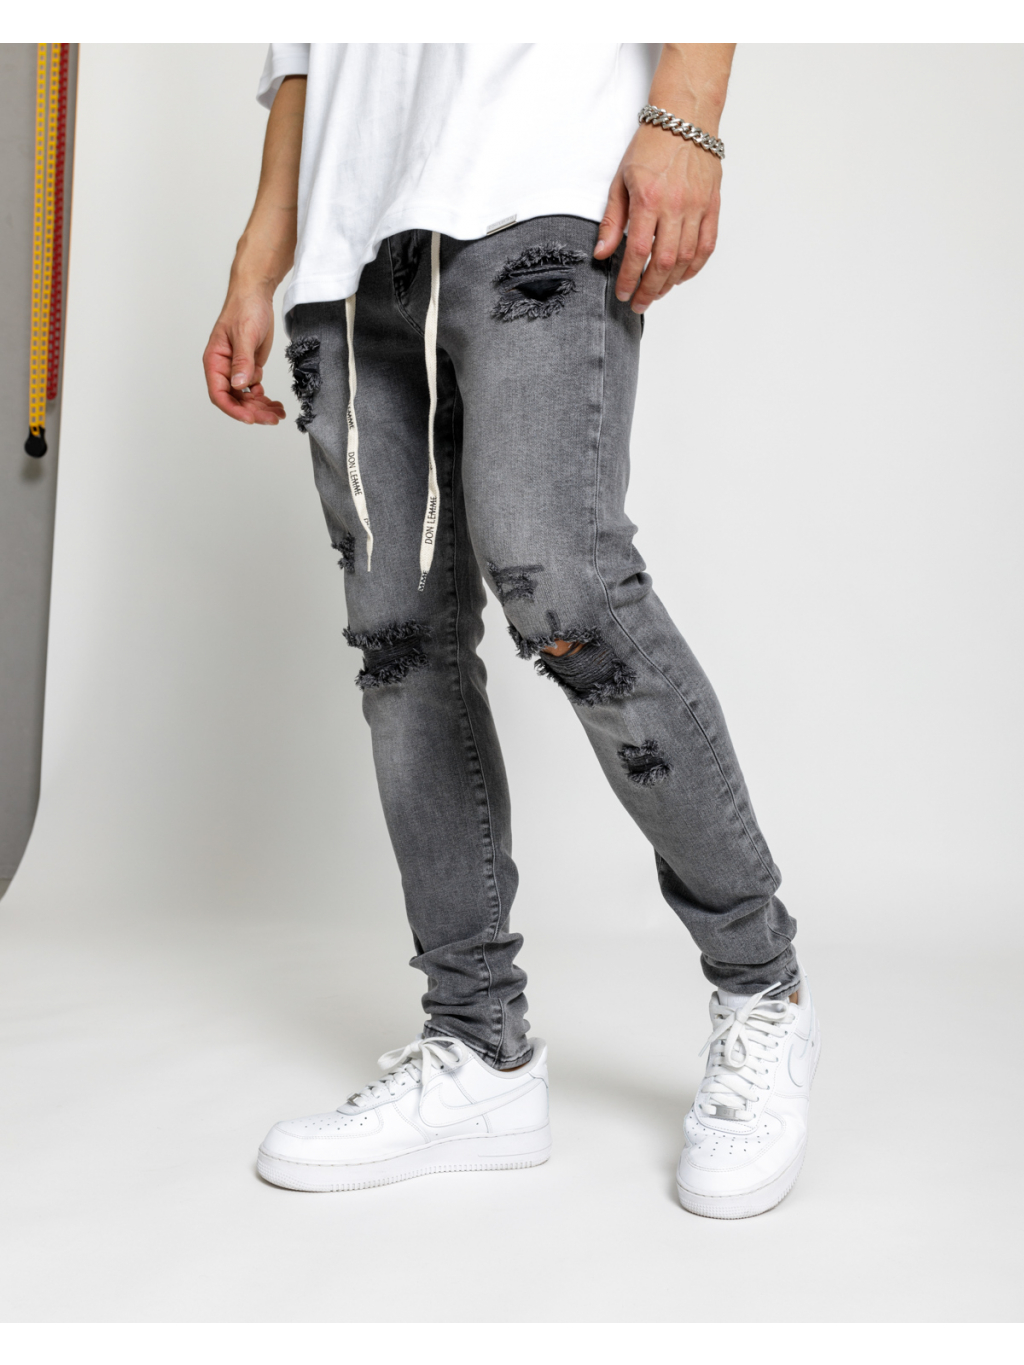 Jeans Torn - grey - Donlemme.com